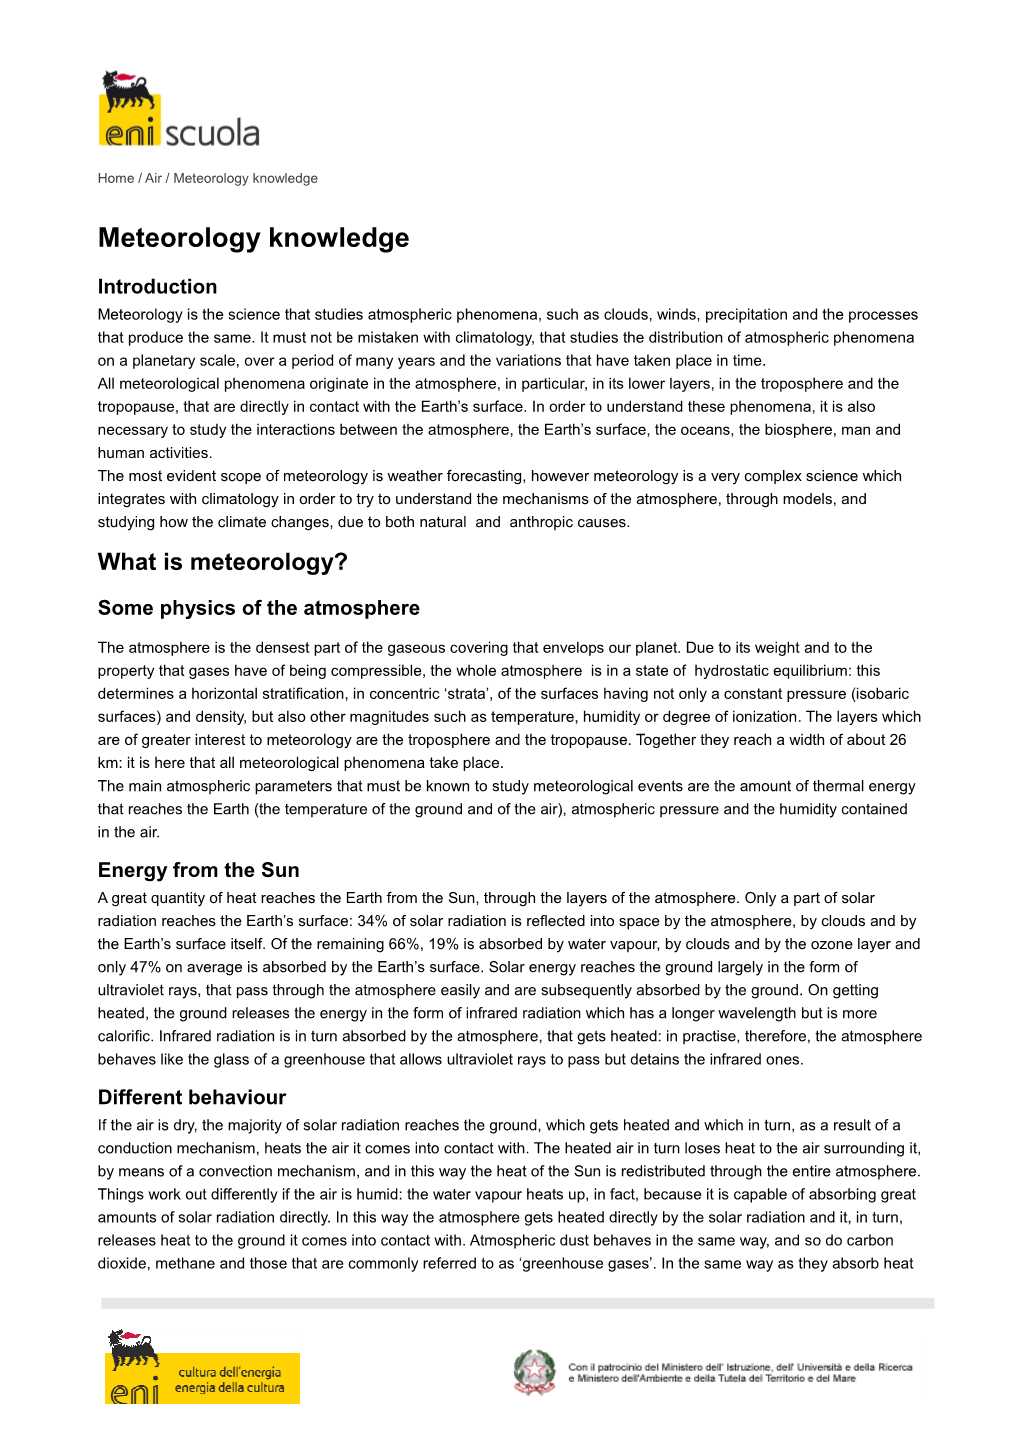 Download "Meteorology Knowledge" Pdf File